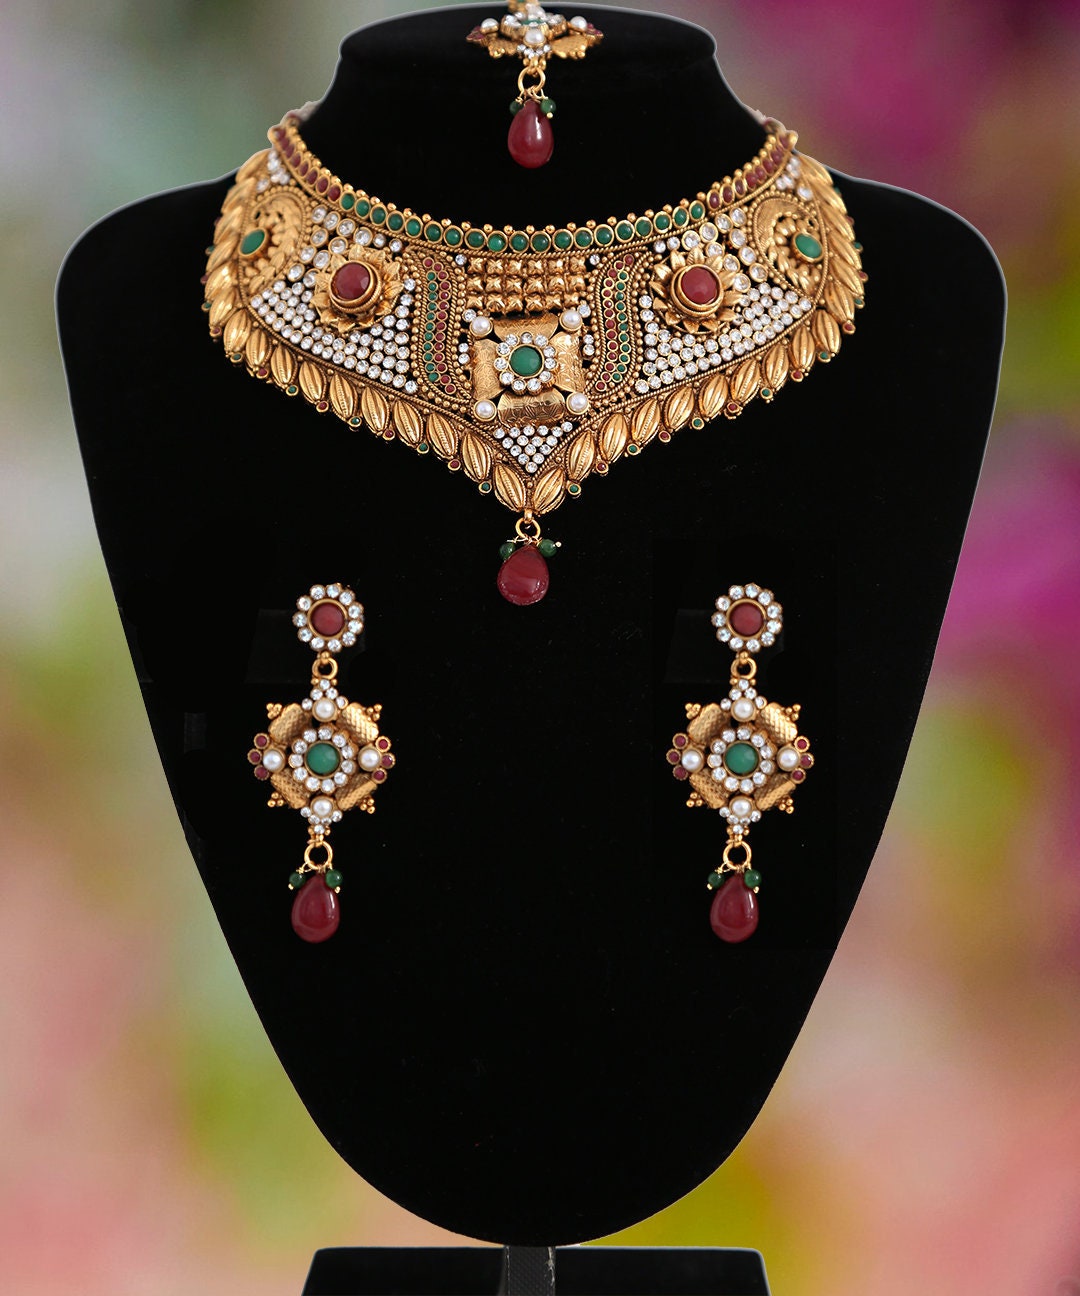 Ladies Fashion Indian jewellery polki Necklace set with Multicolor Kundan Stones|Wedding Jewelry Womens Necklace|Earrings Maang Tikka